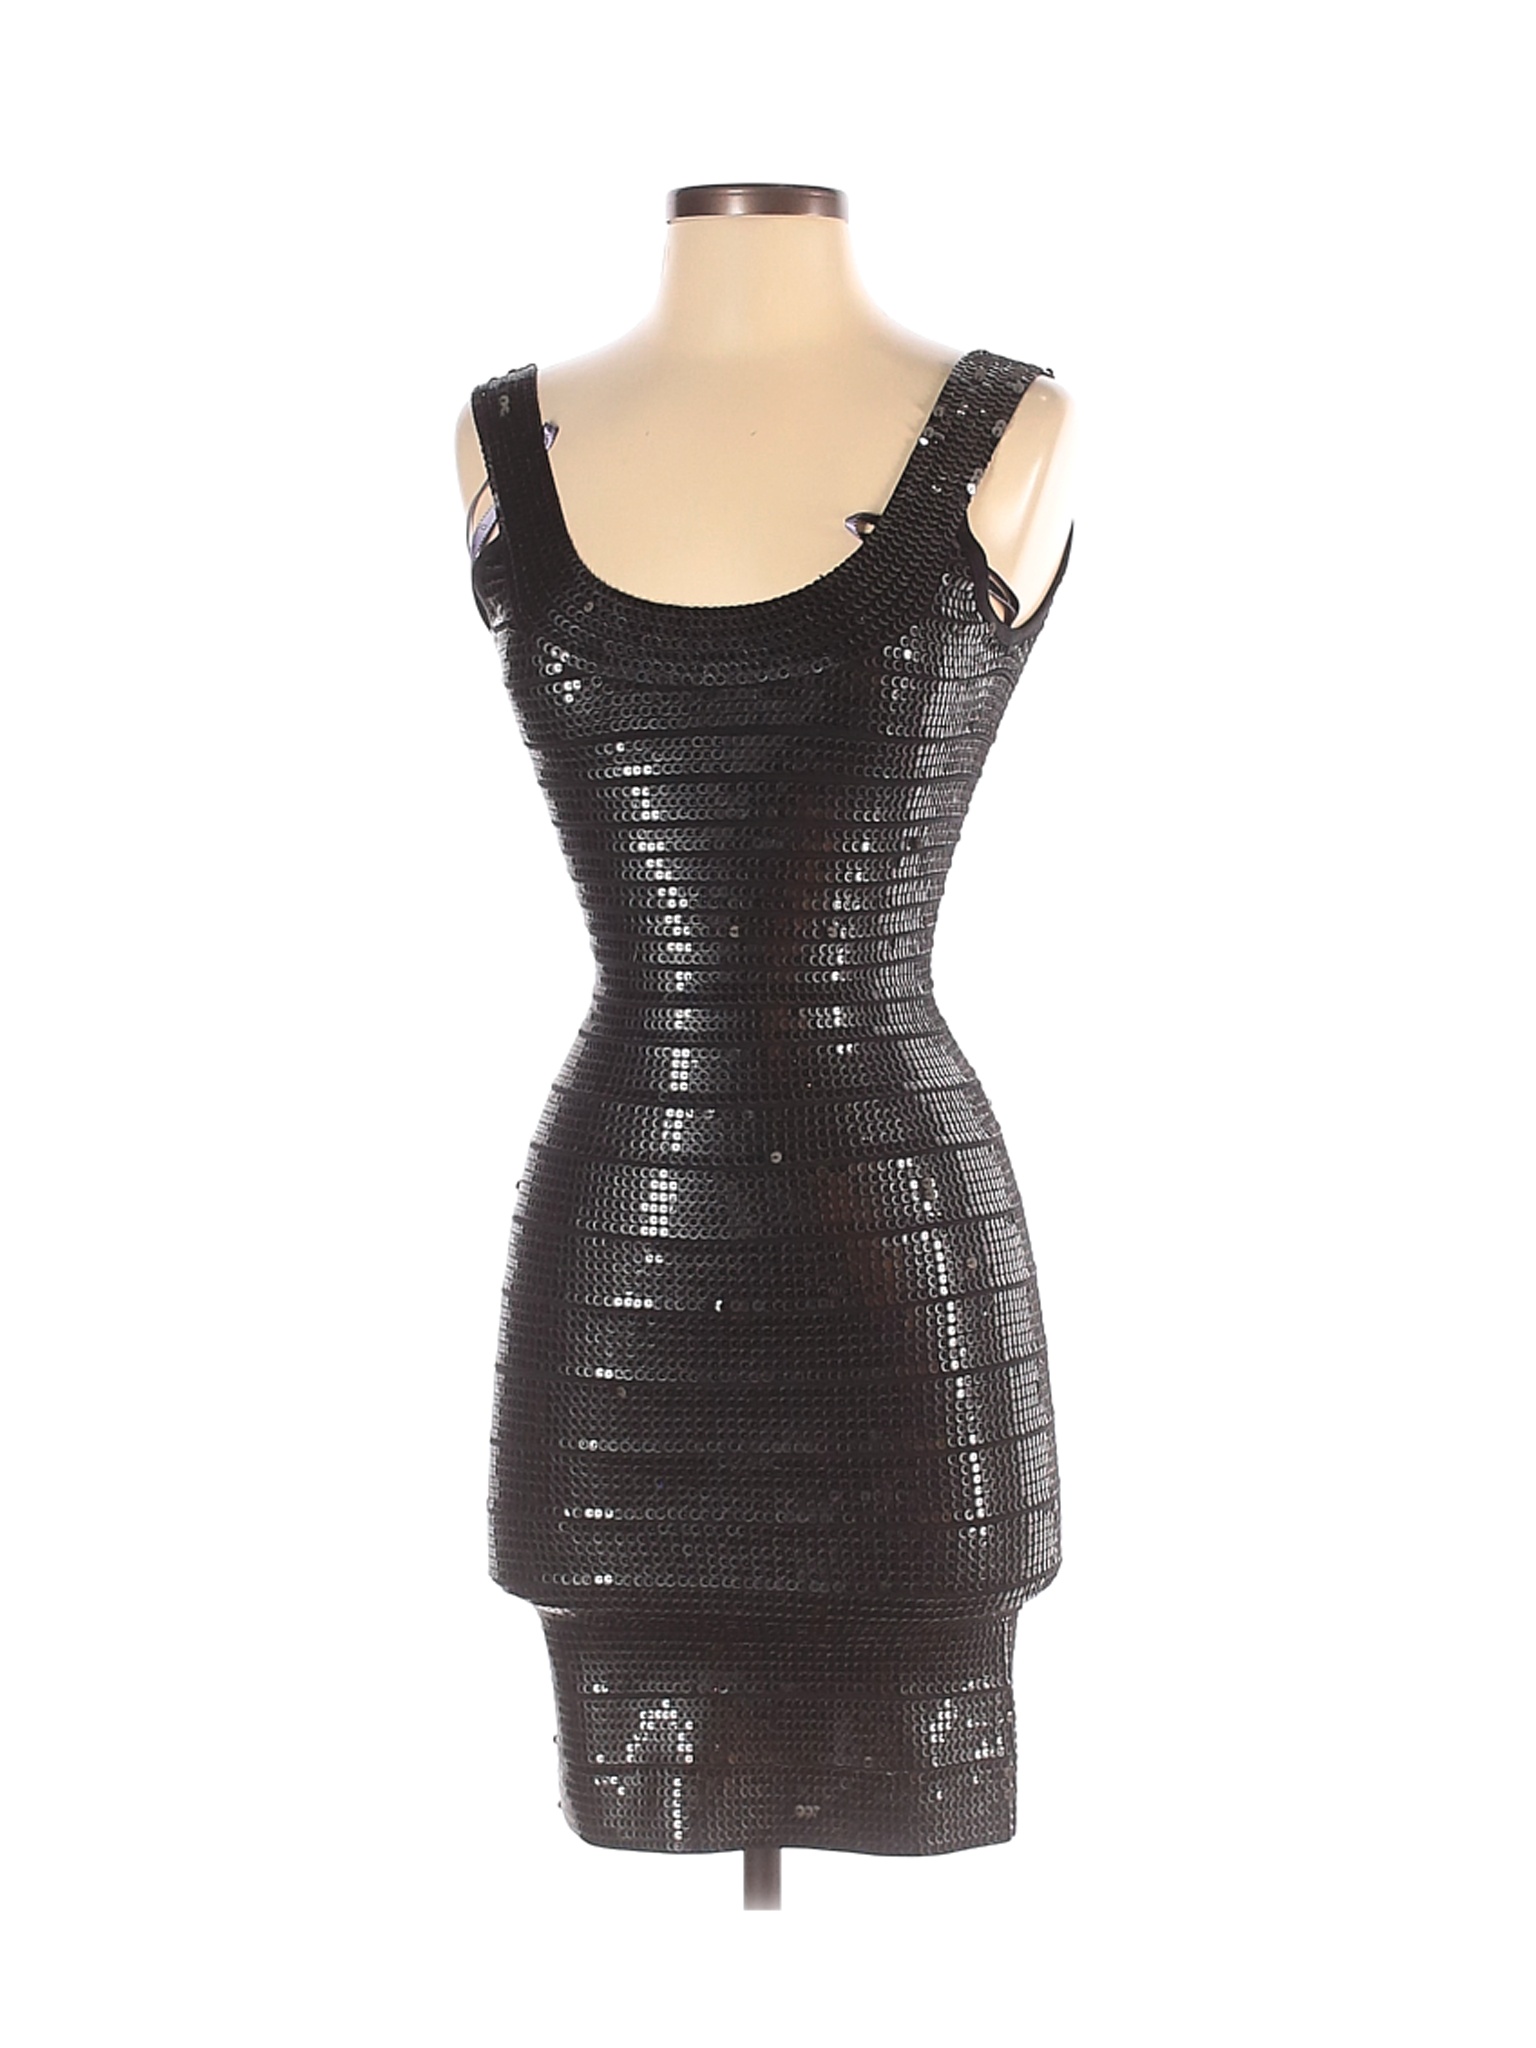 Herve Leger Women Black Cocktail Dress 6 | eBay